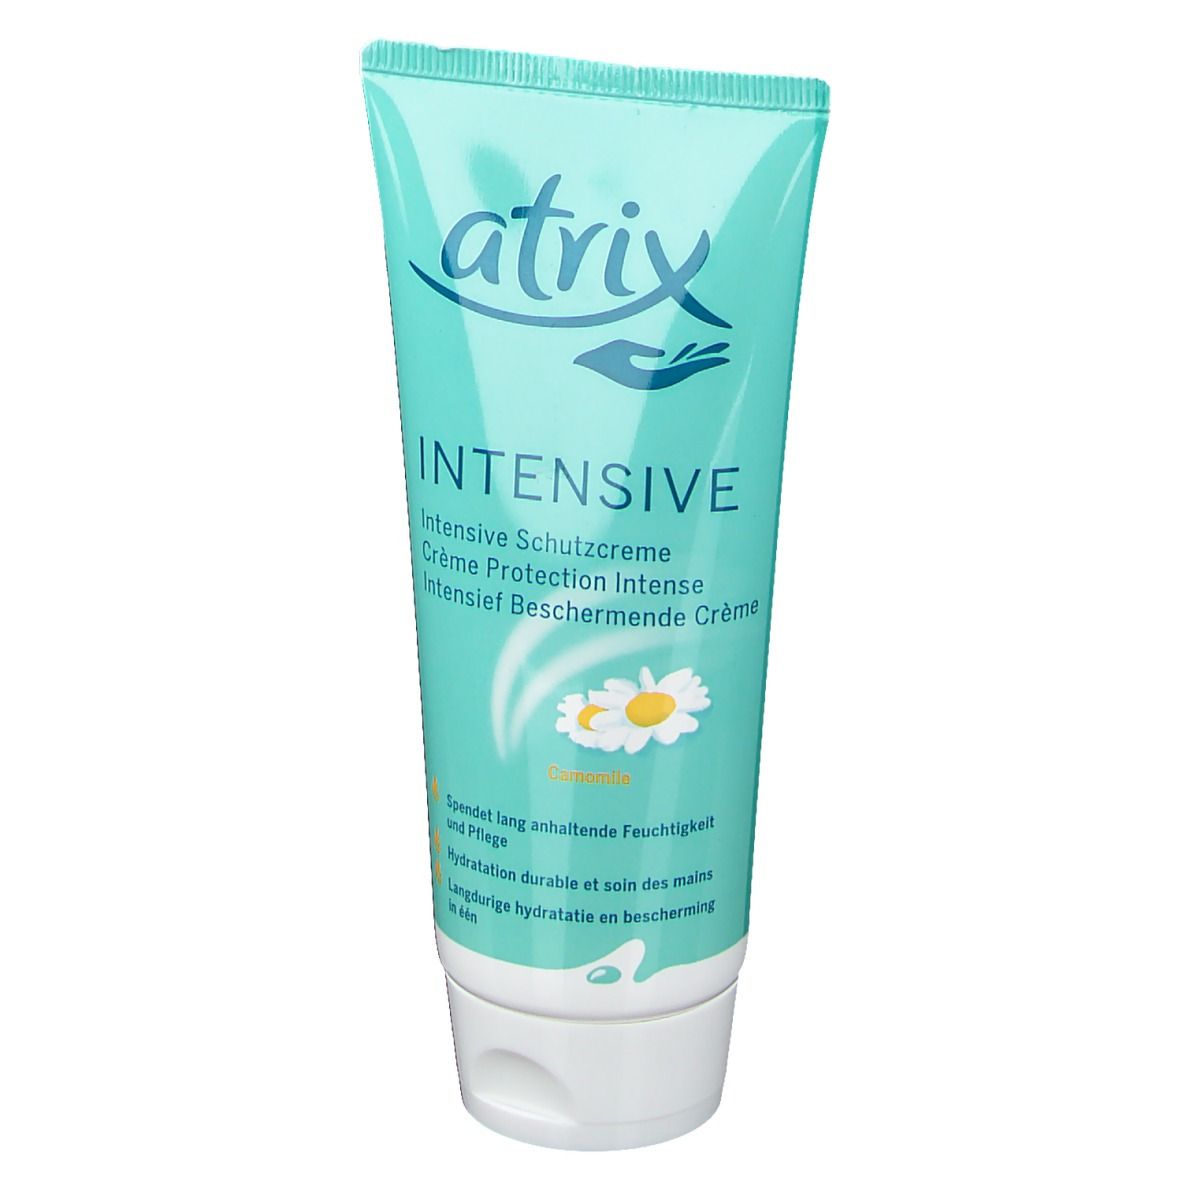 atrix® INTENSIVE Crème Protectiom Intense